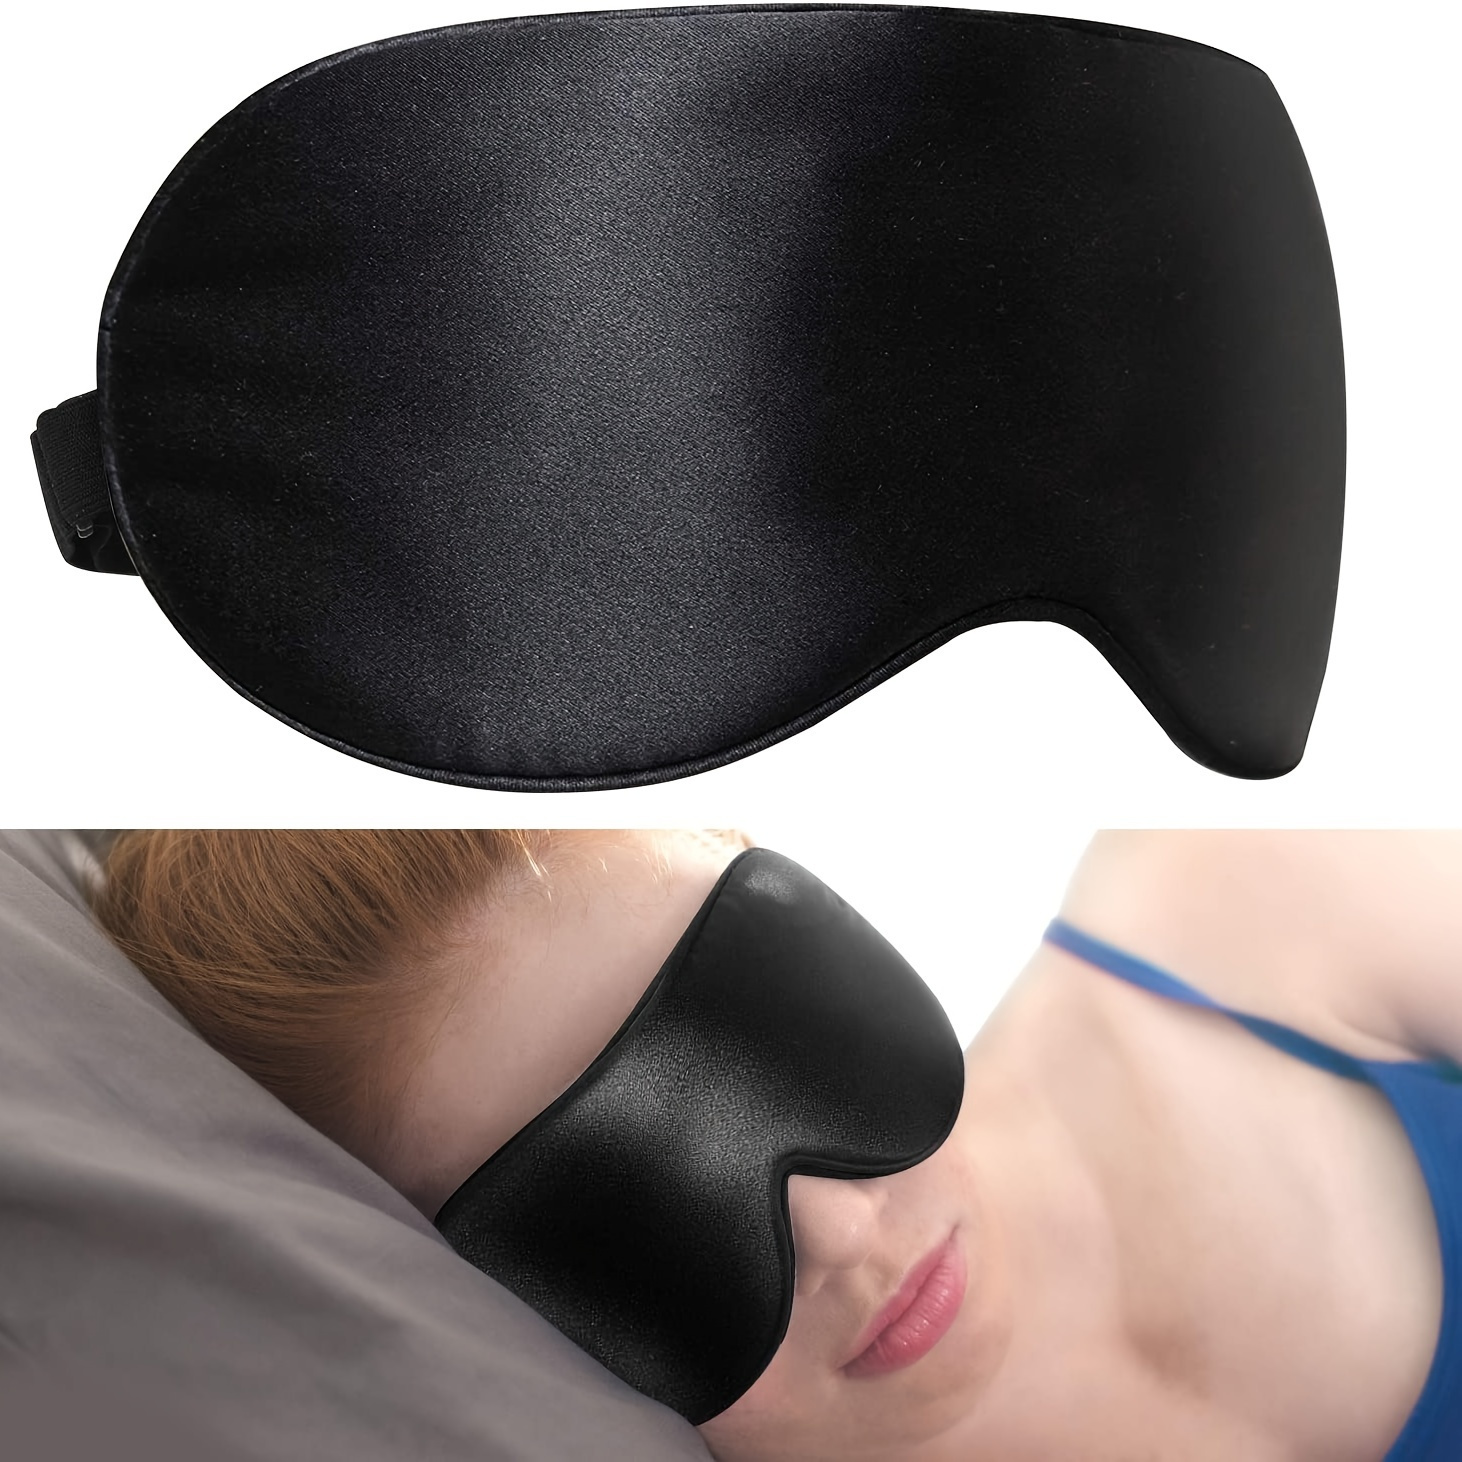 

100% Mulberry Silk Eye Mask For Men Women: Block Out Light Sleep Mask & Blindfold, Soft & Smooth, For A Full Night's Sleep, Black